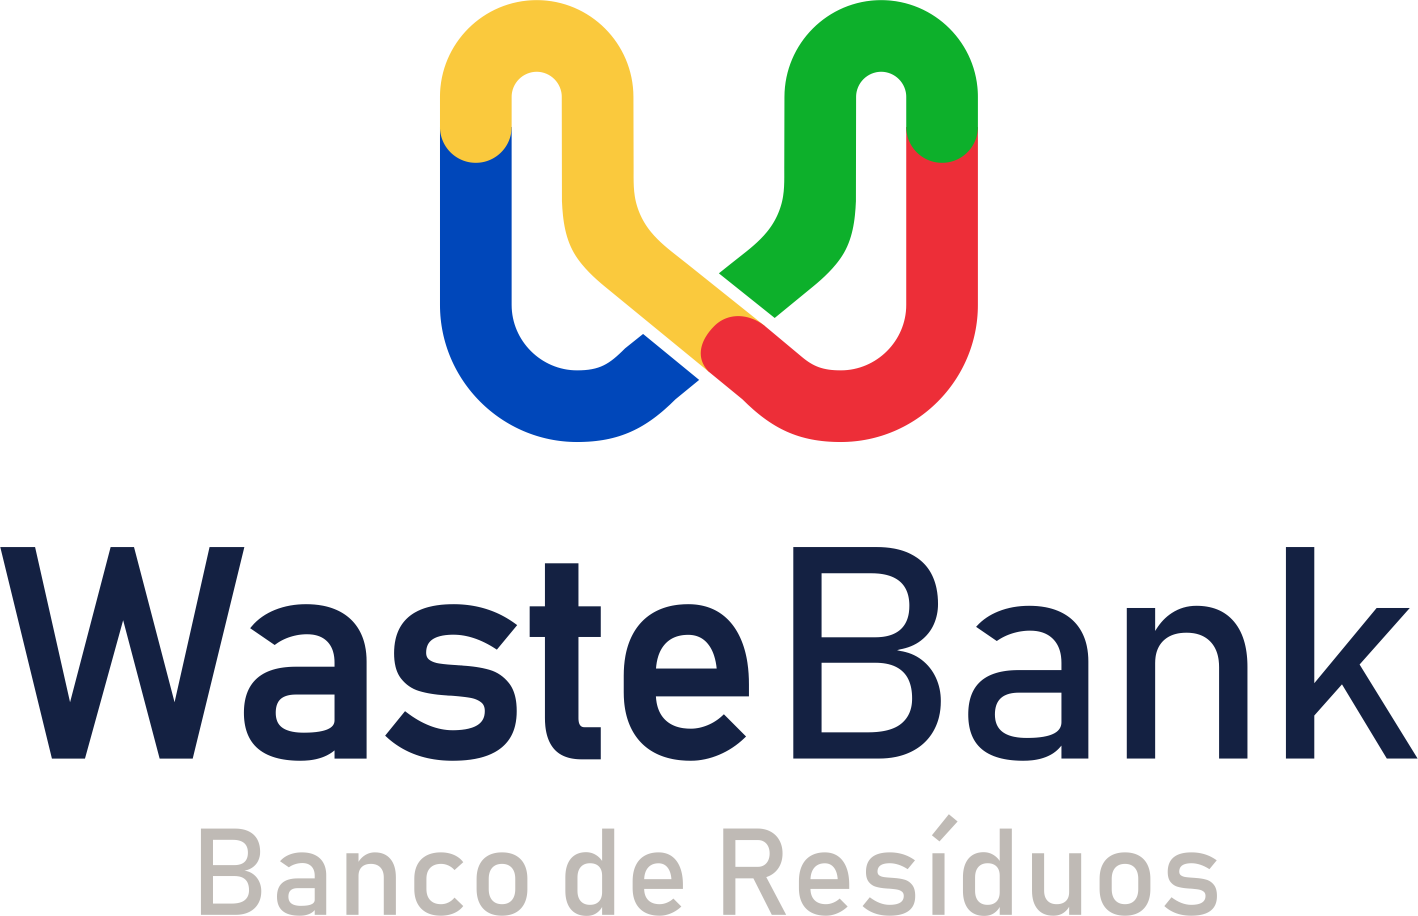 WasteBank